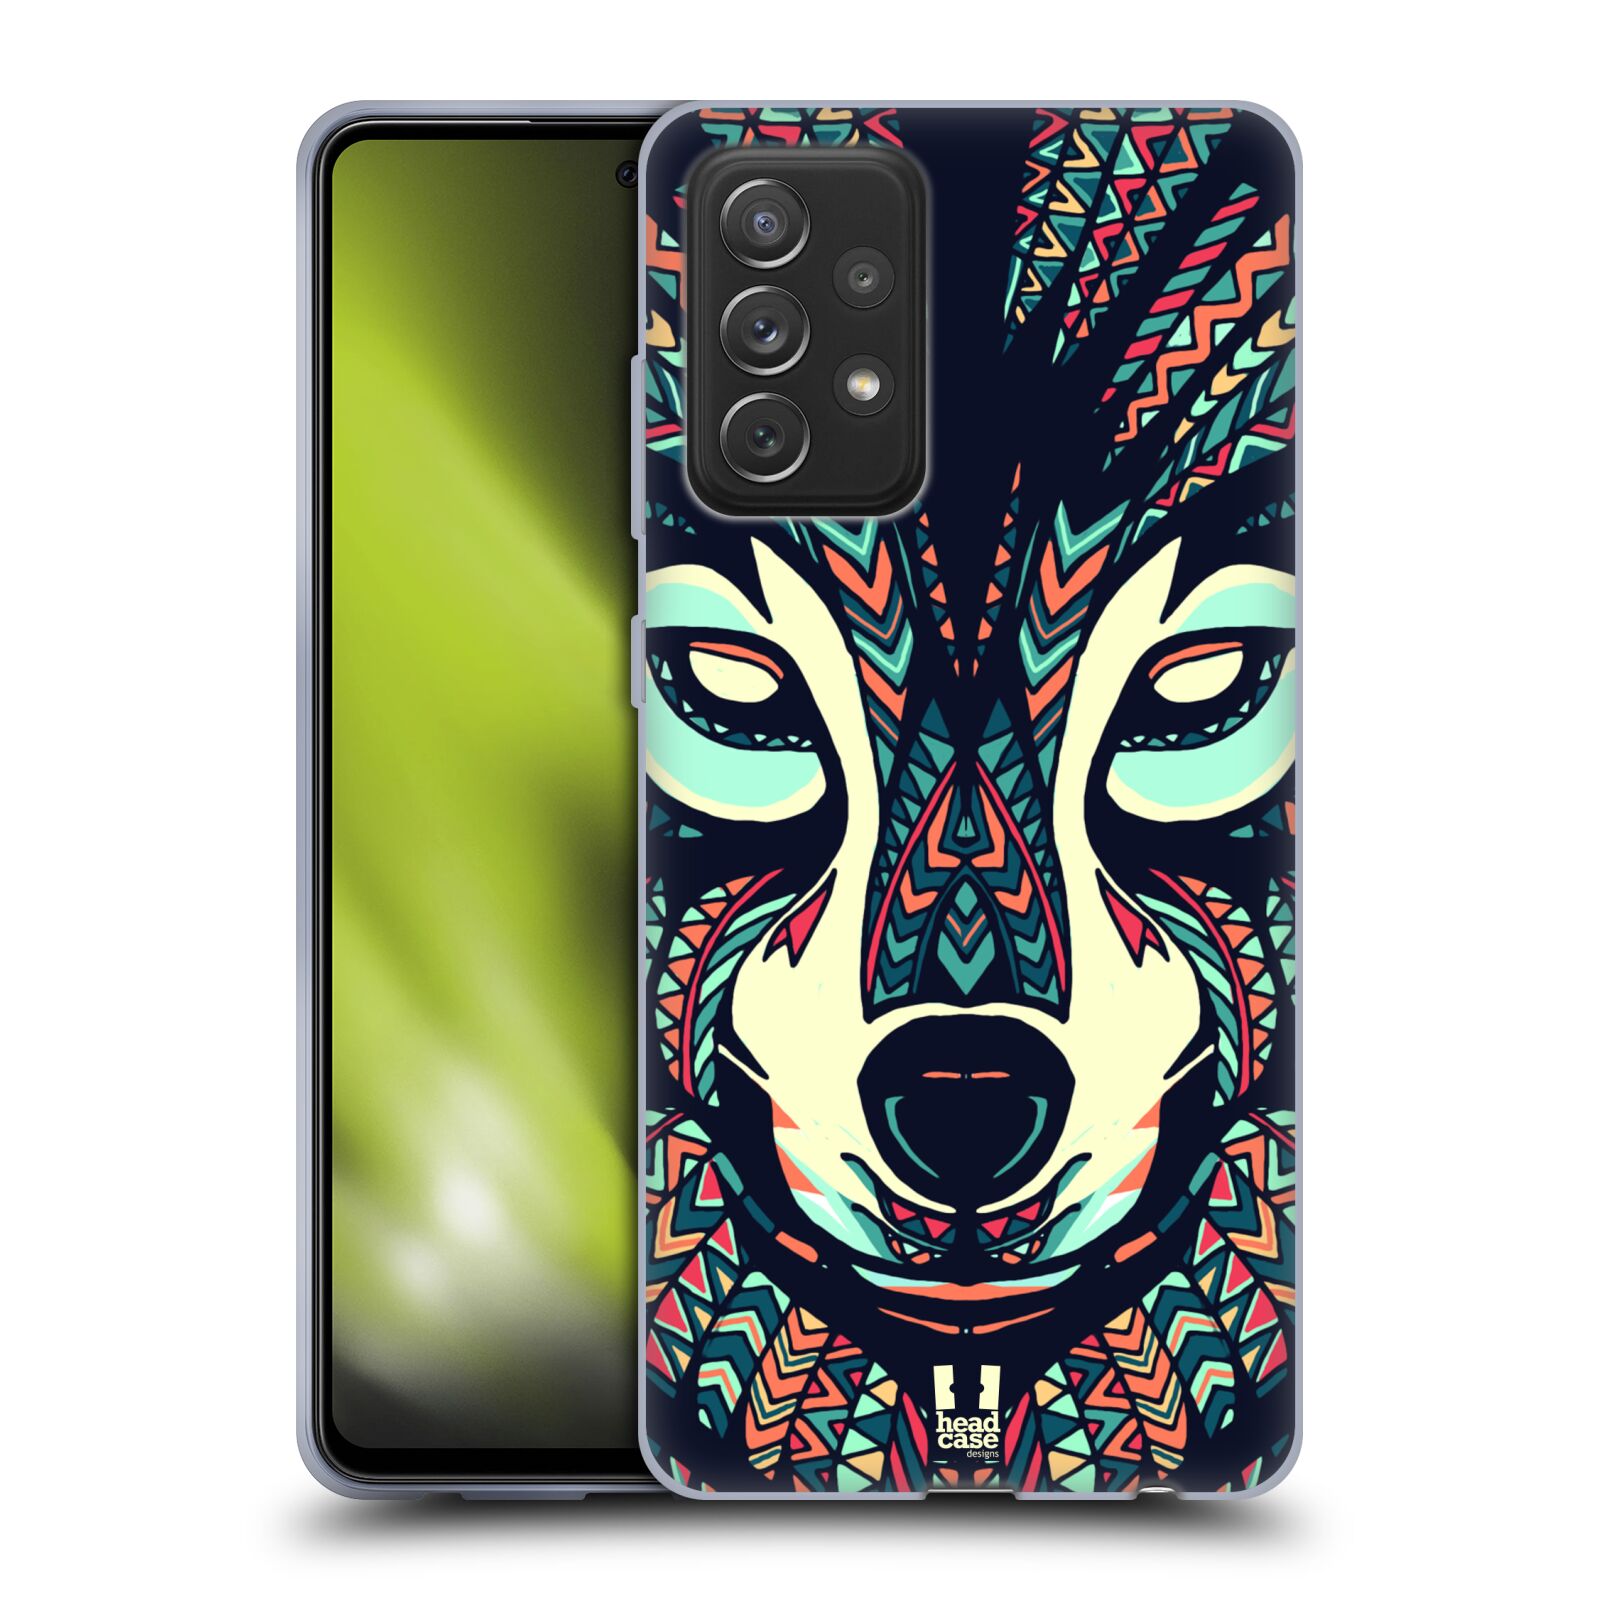 Plastový obal HEAD CASE na mobil Samsung Galaxy A72 / A72 5G vzor Aztécký motiv zvíře 3 vlk